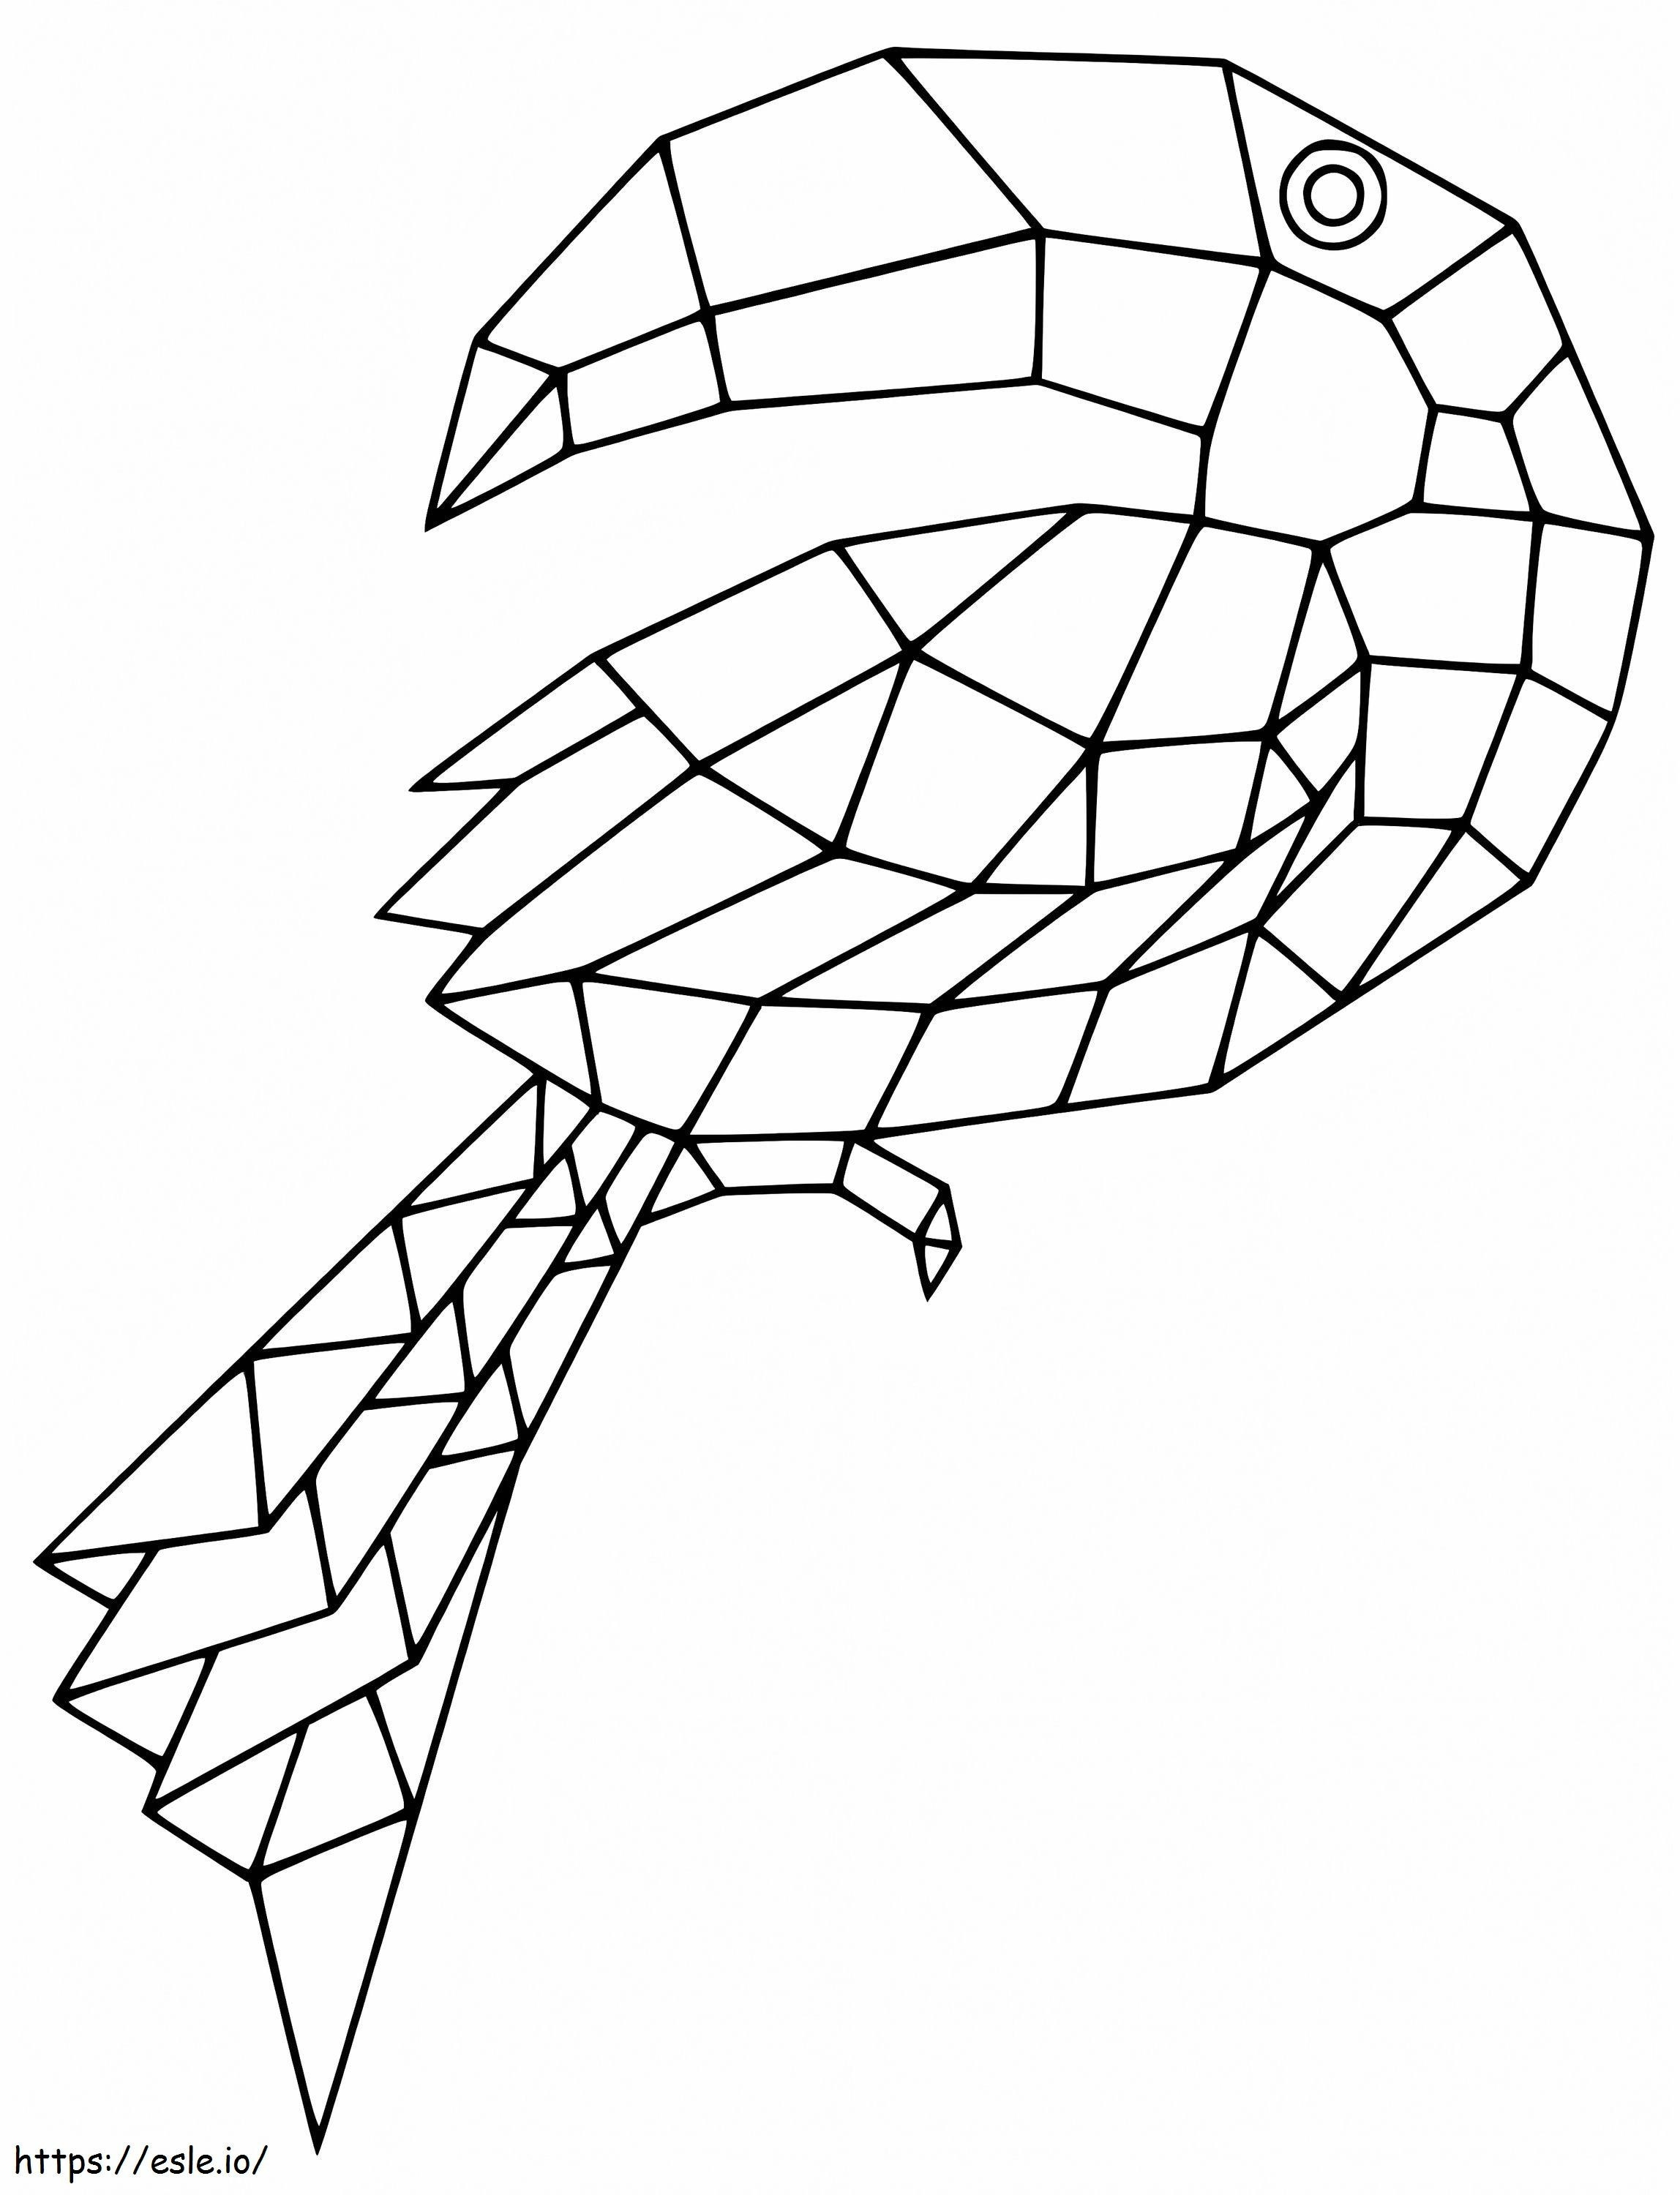 Origami-Nashornvogel ausmalbilder